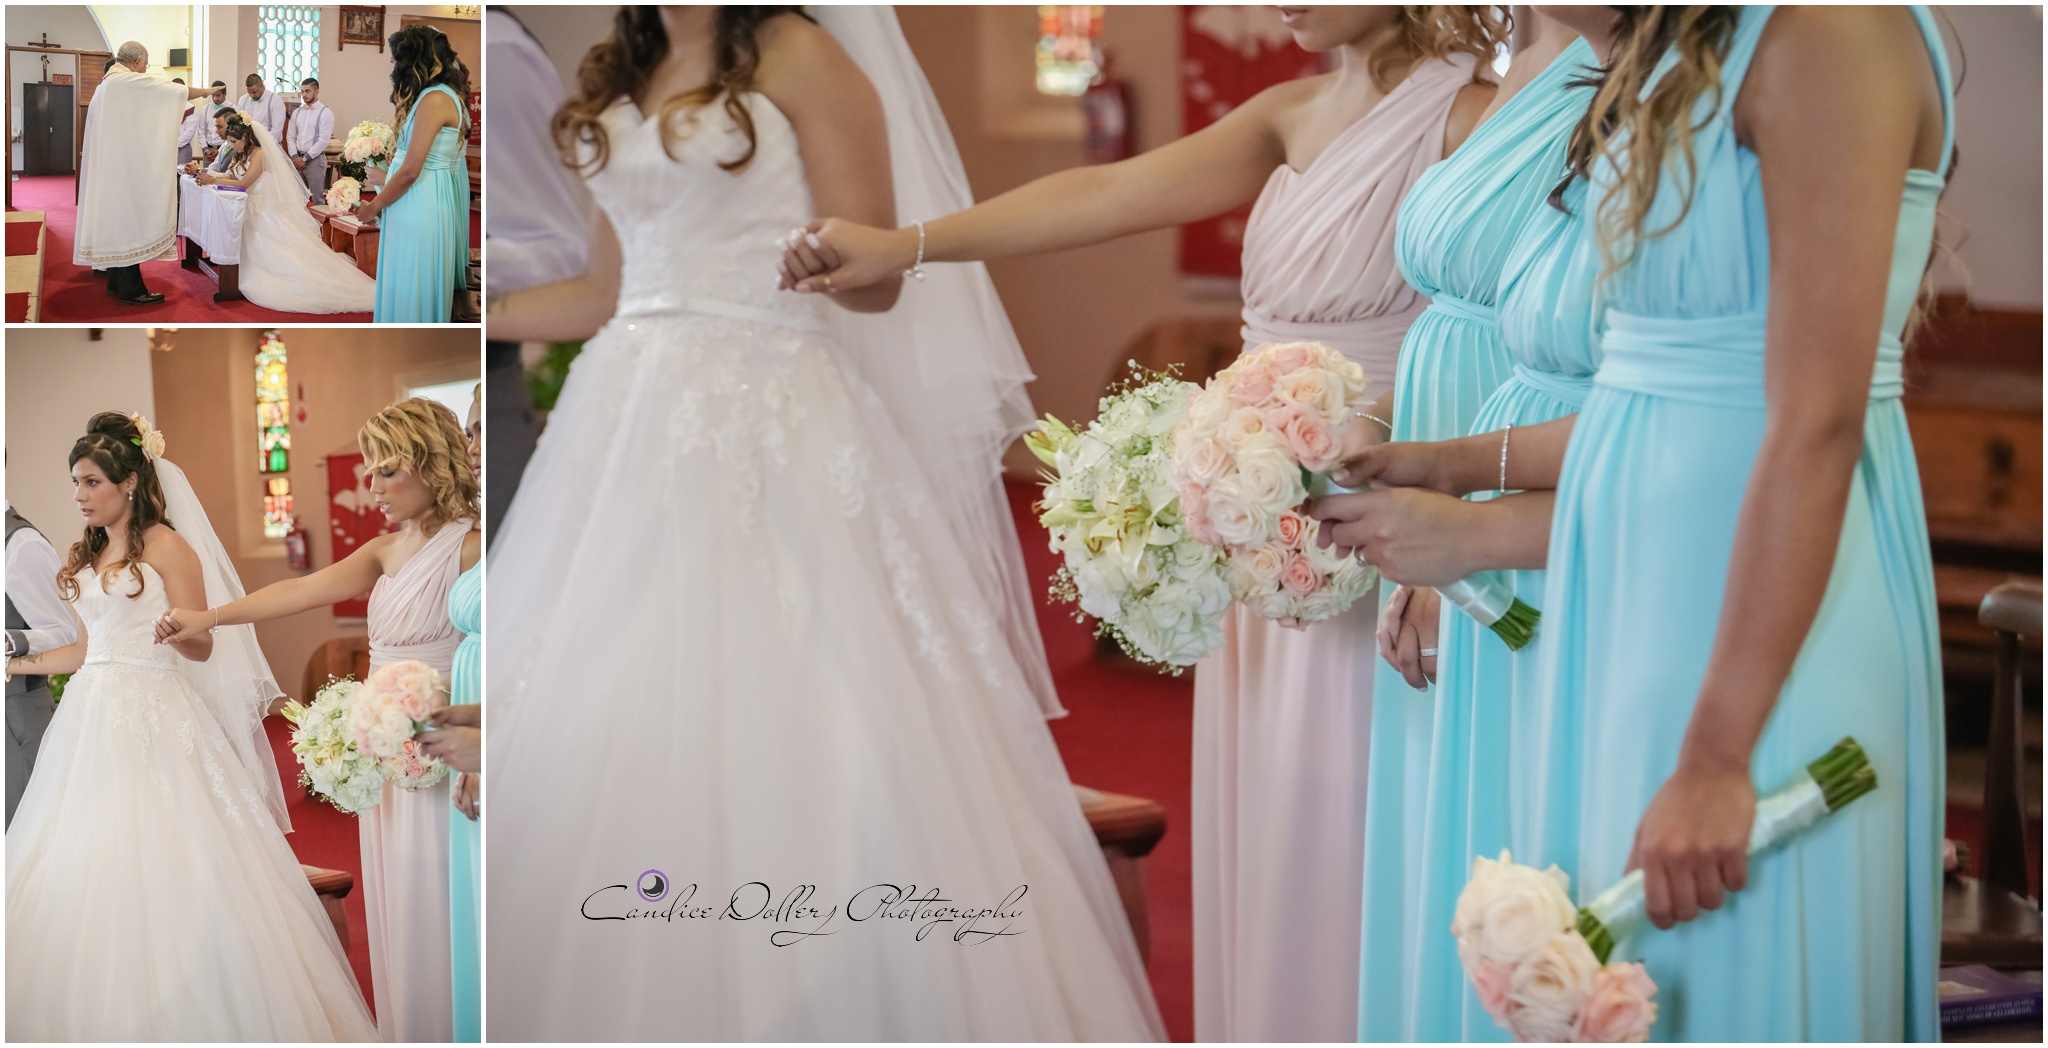 Paula & Jaycee's Wedding - Cypress Dale - Candice Dollery Photography_3048